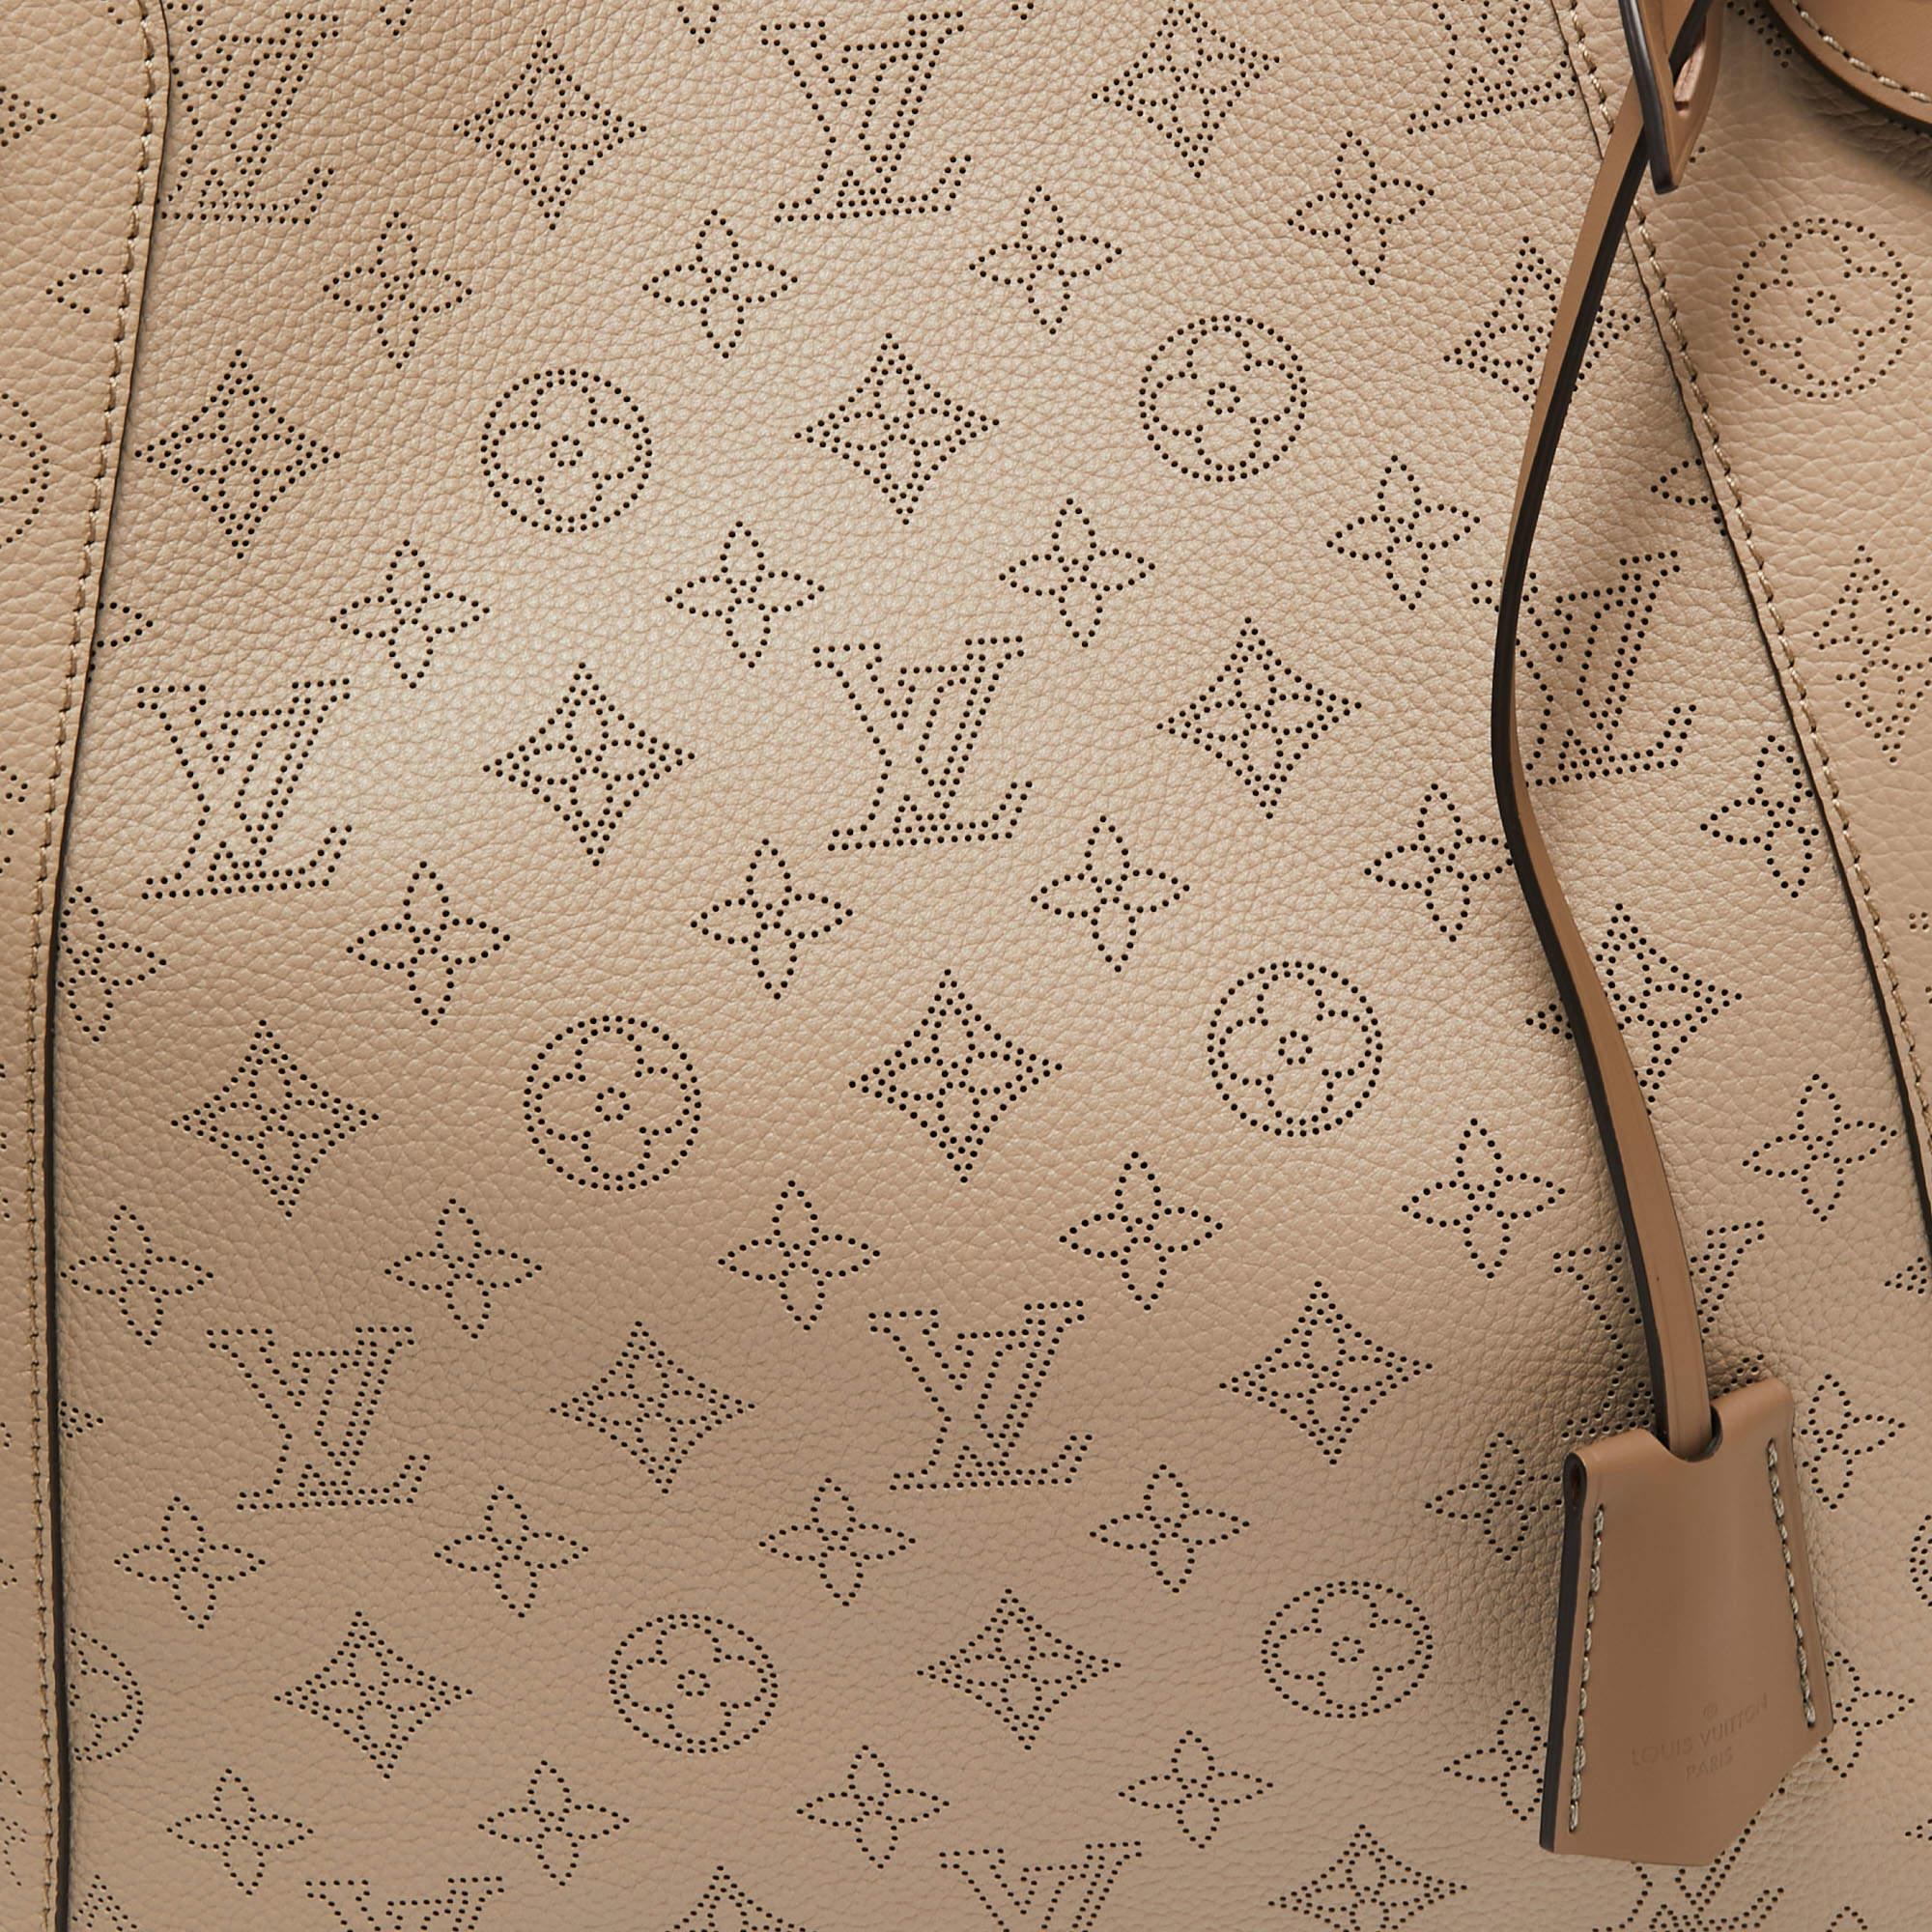 Louis Vuitton 2017 Mahina Hina MM - Pink Totes, Handbags - LOU212478